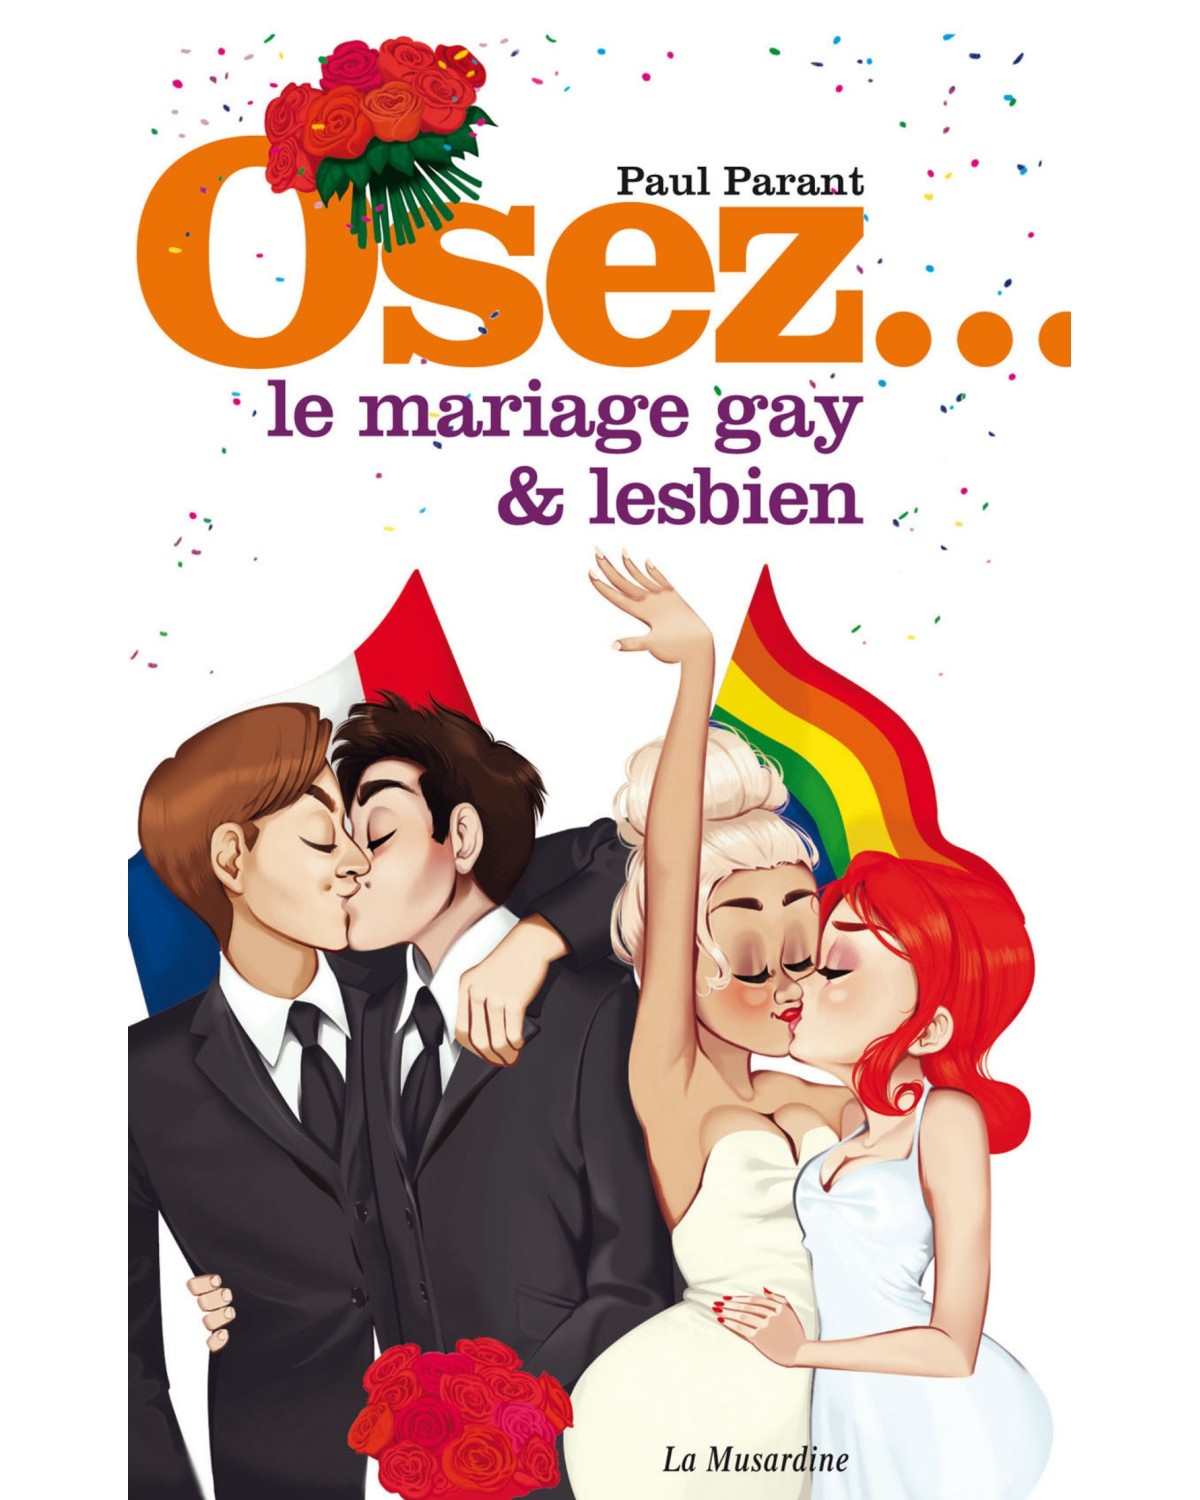 Osez le mariage gay & lesbien